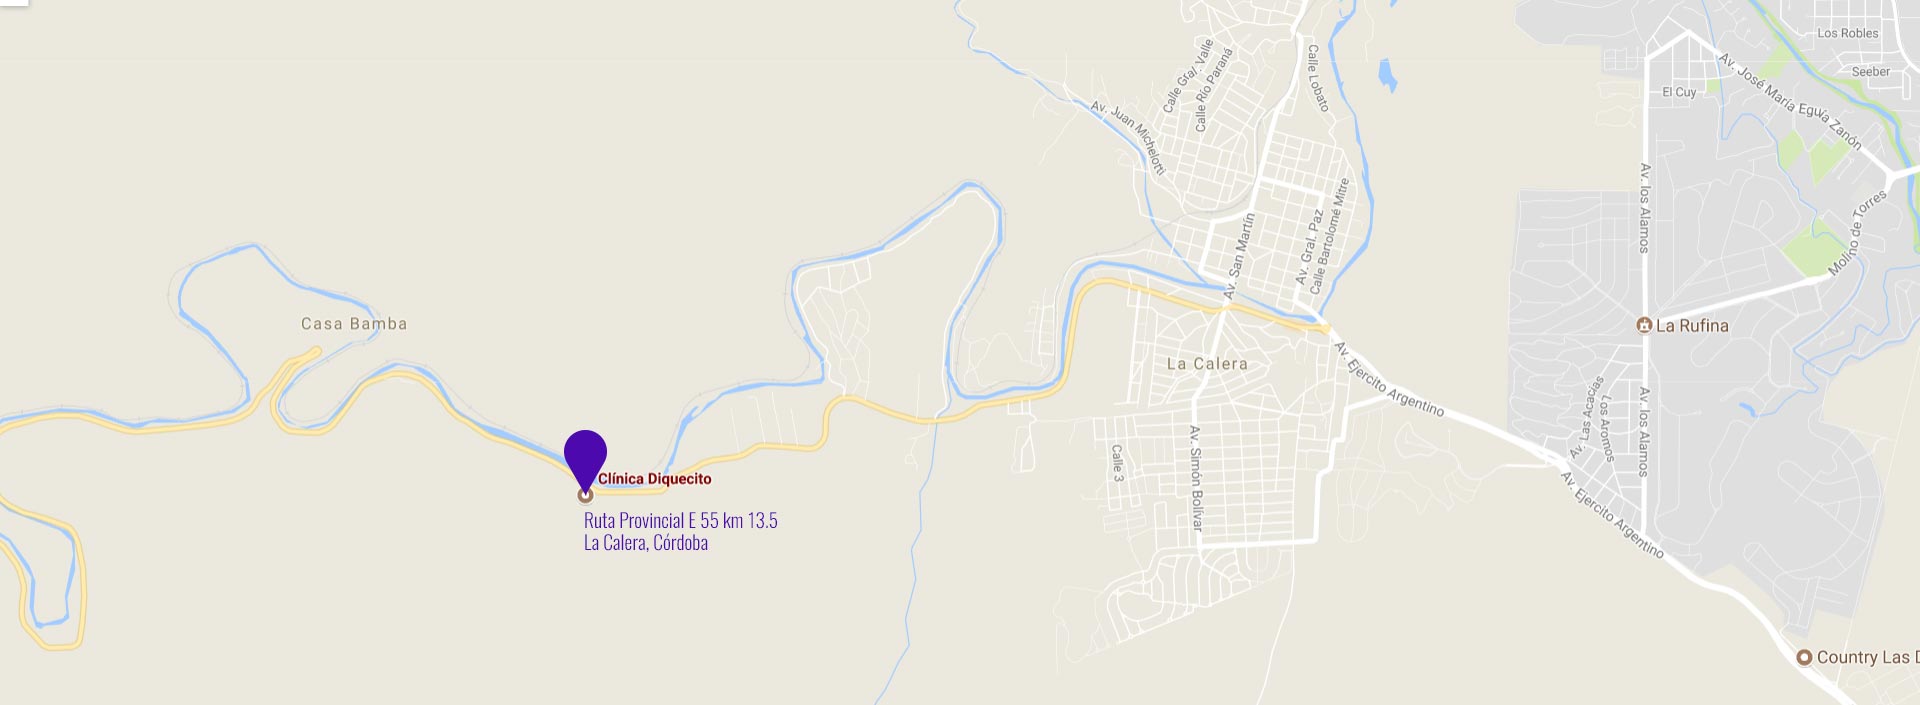 Ver ubicación en Google Maps